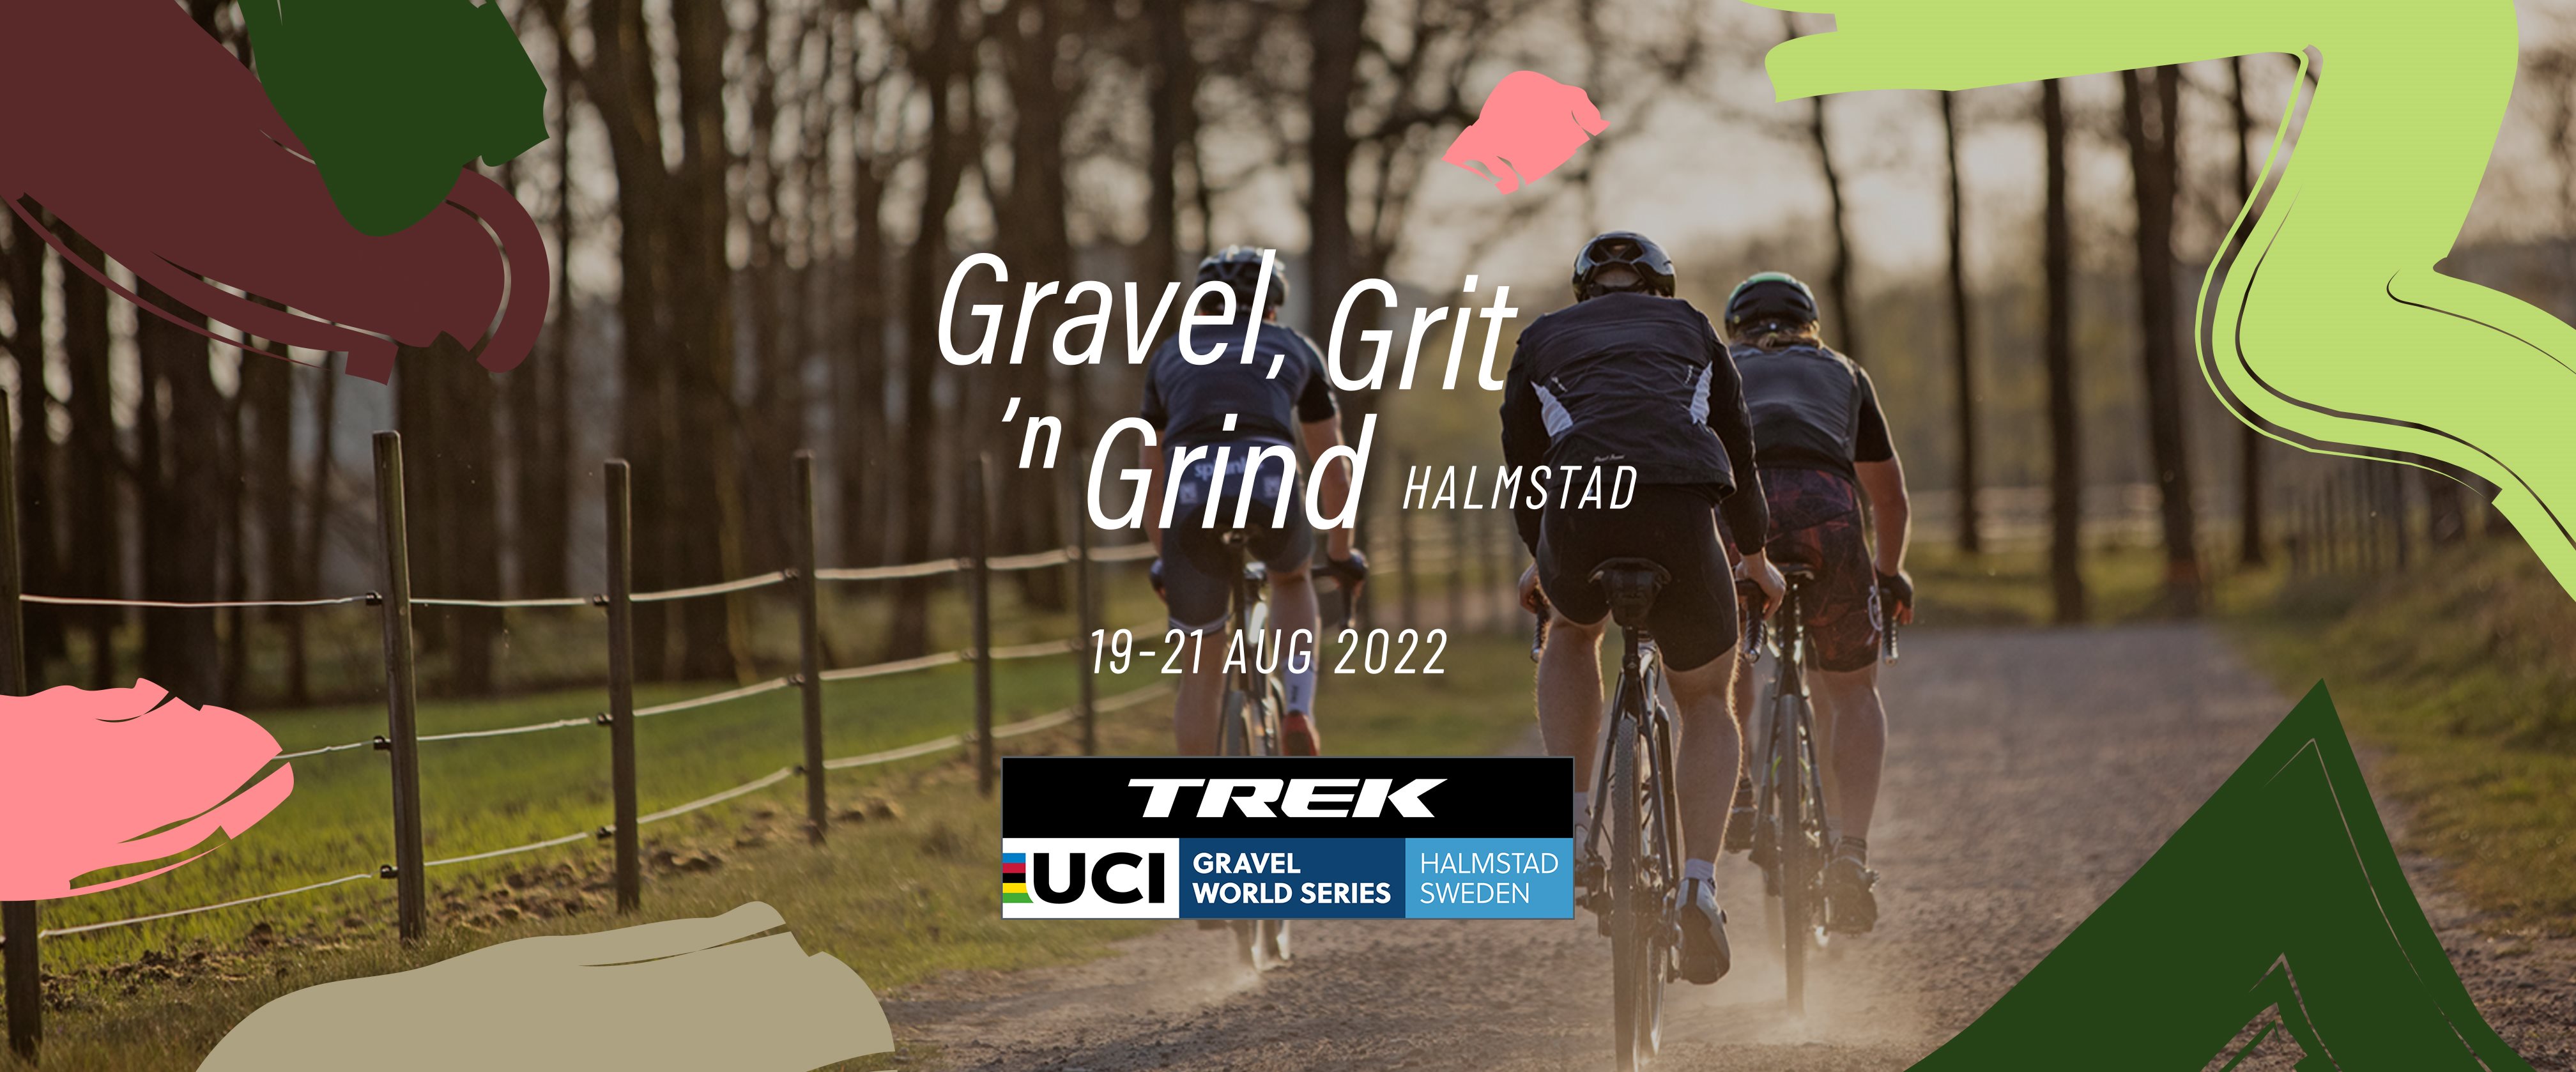 Gravel, Grit 'n Grind Halmstad 2022 Stage 1